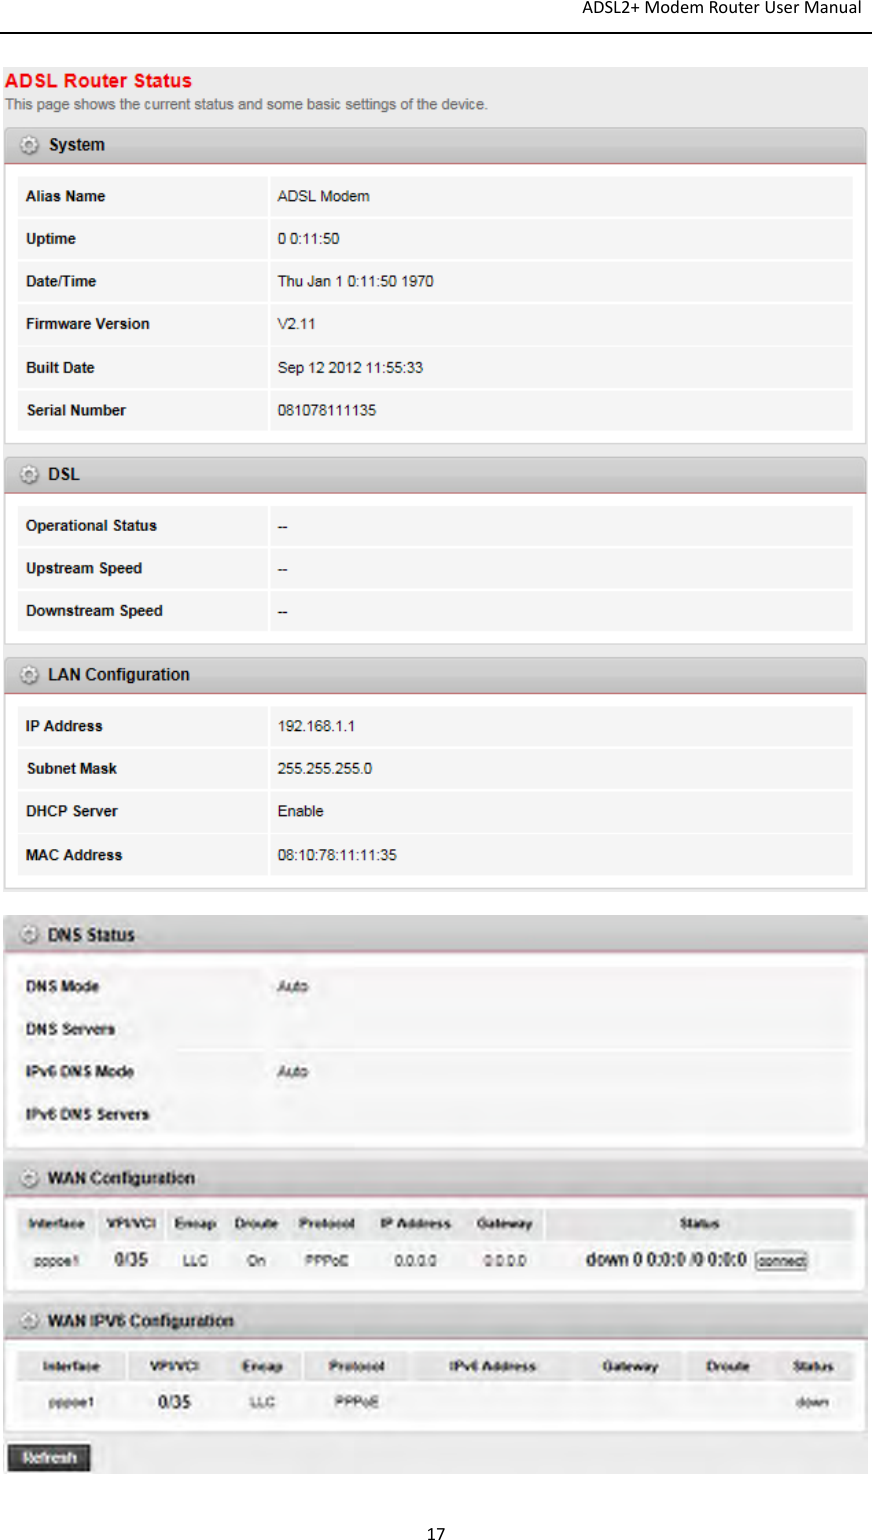 ADSL2+ModemRouterUserManual17